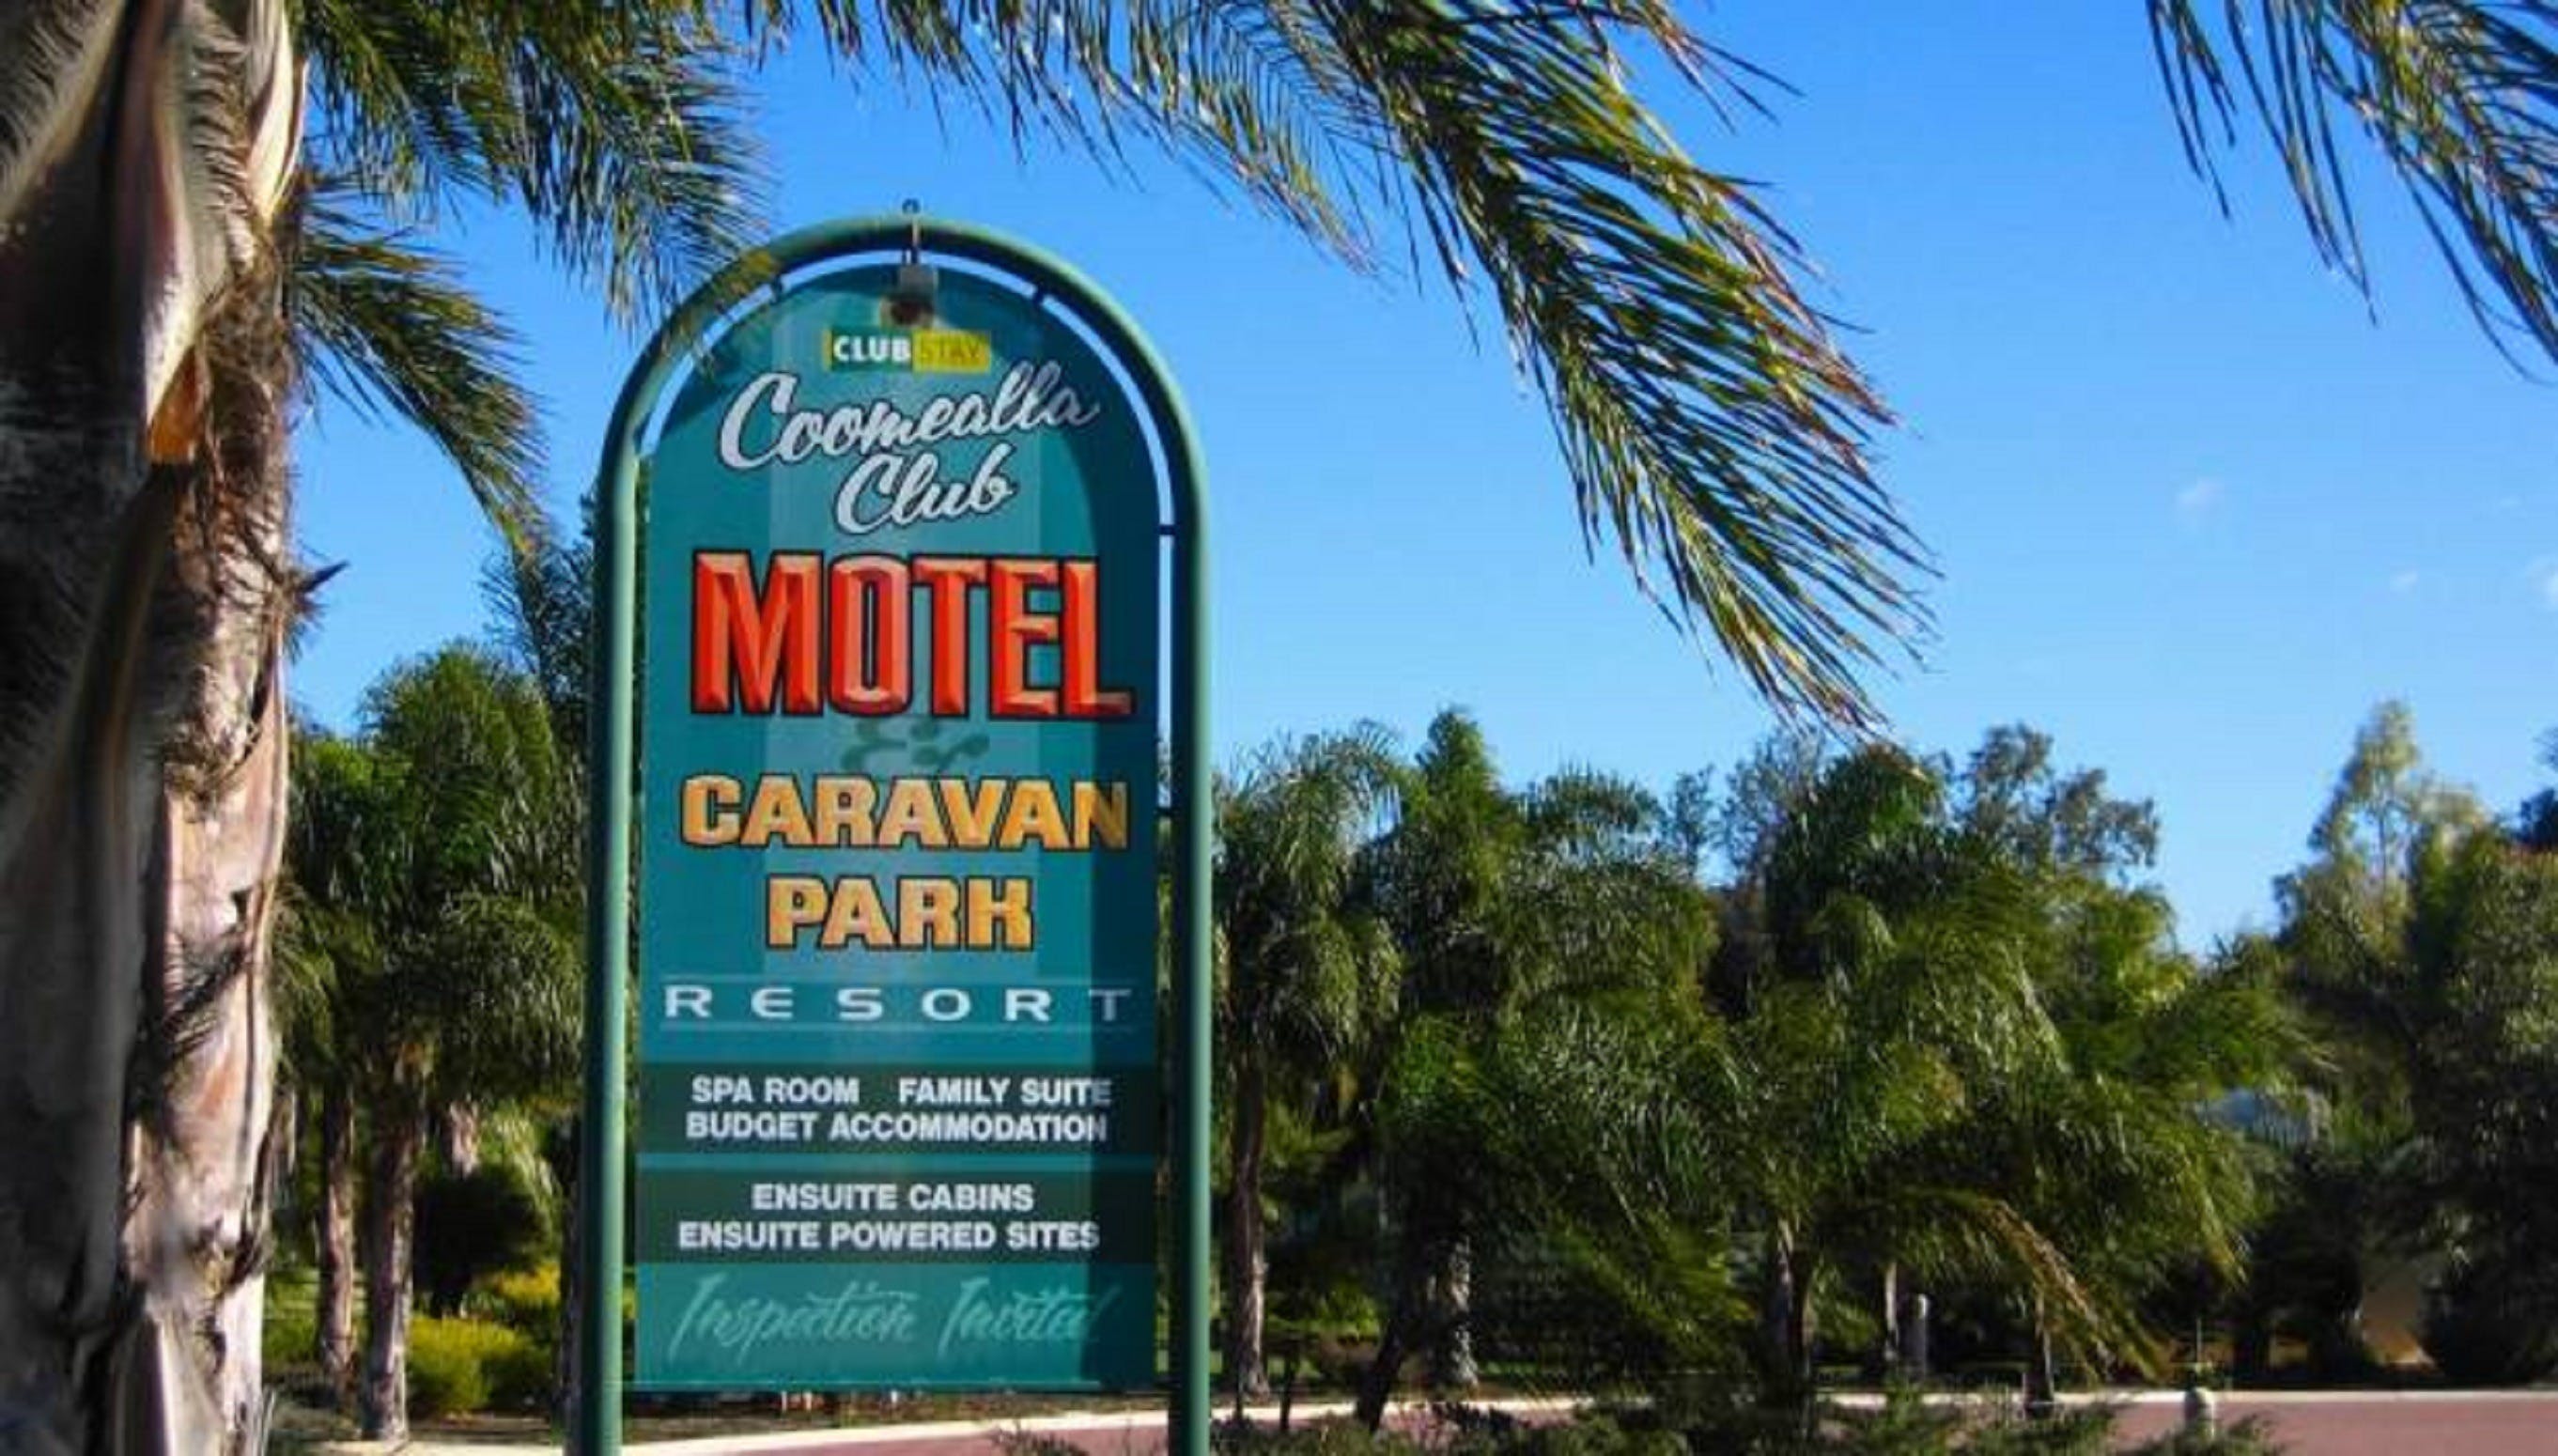 Coomealla Club Motel and Caravan Park Resort - St Kilda Accommodation